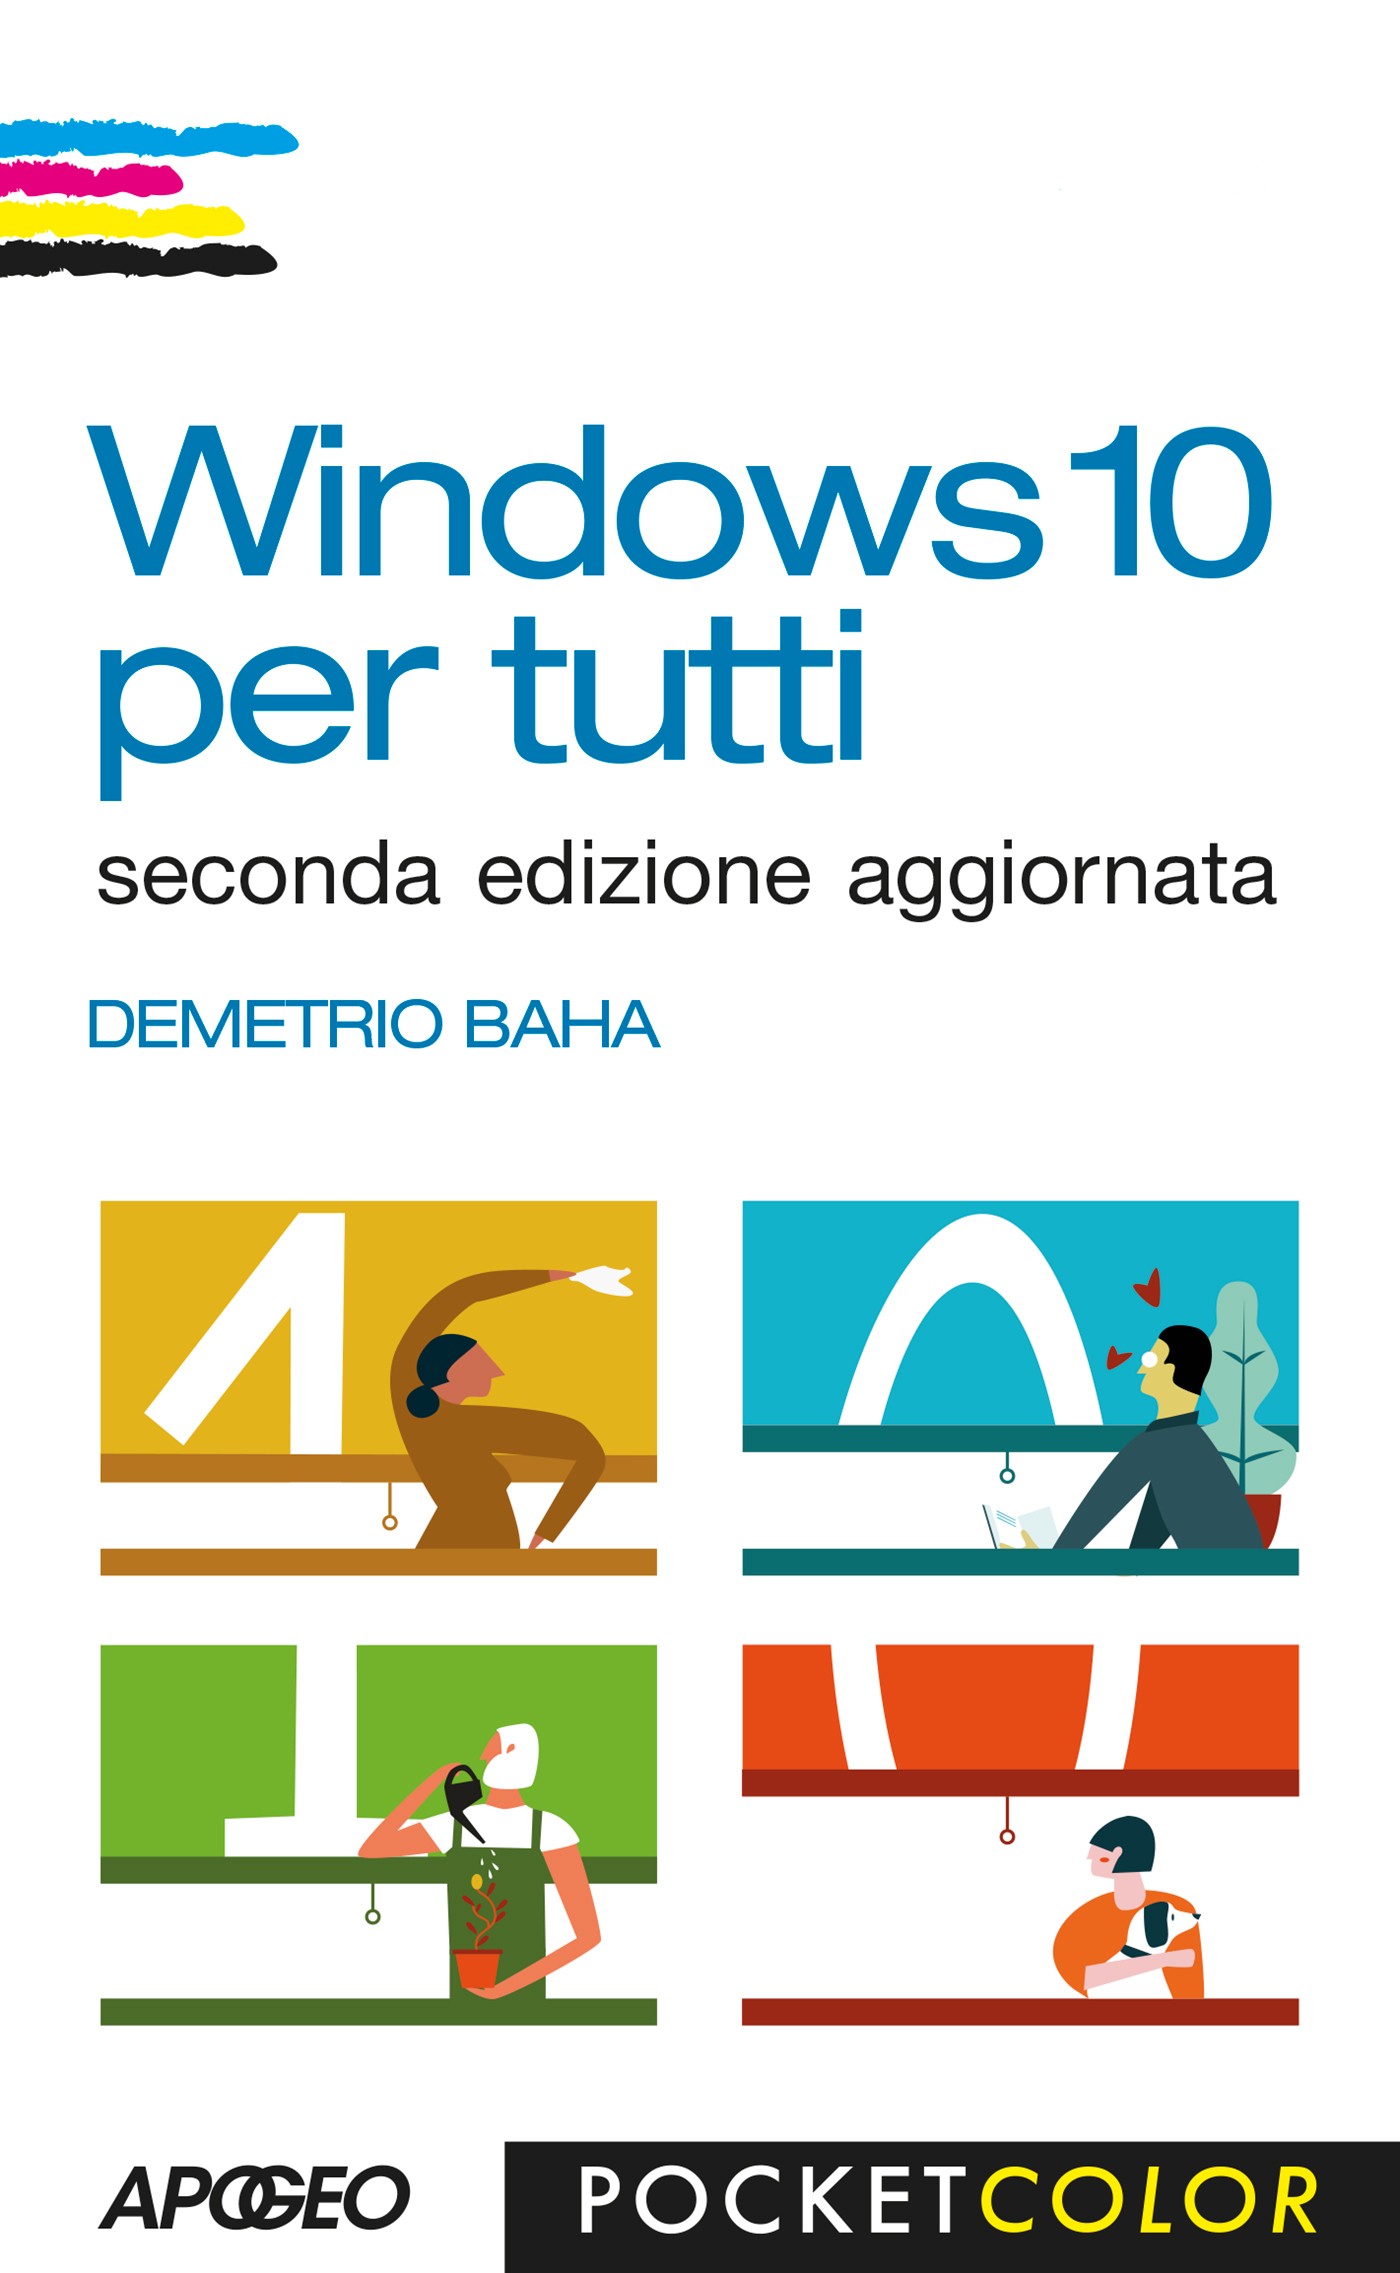 Windows 10 per tutti - Librerie.coop